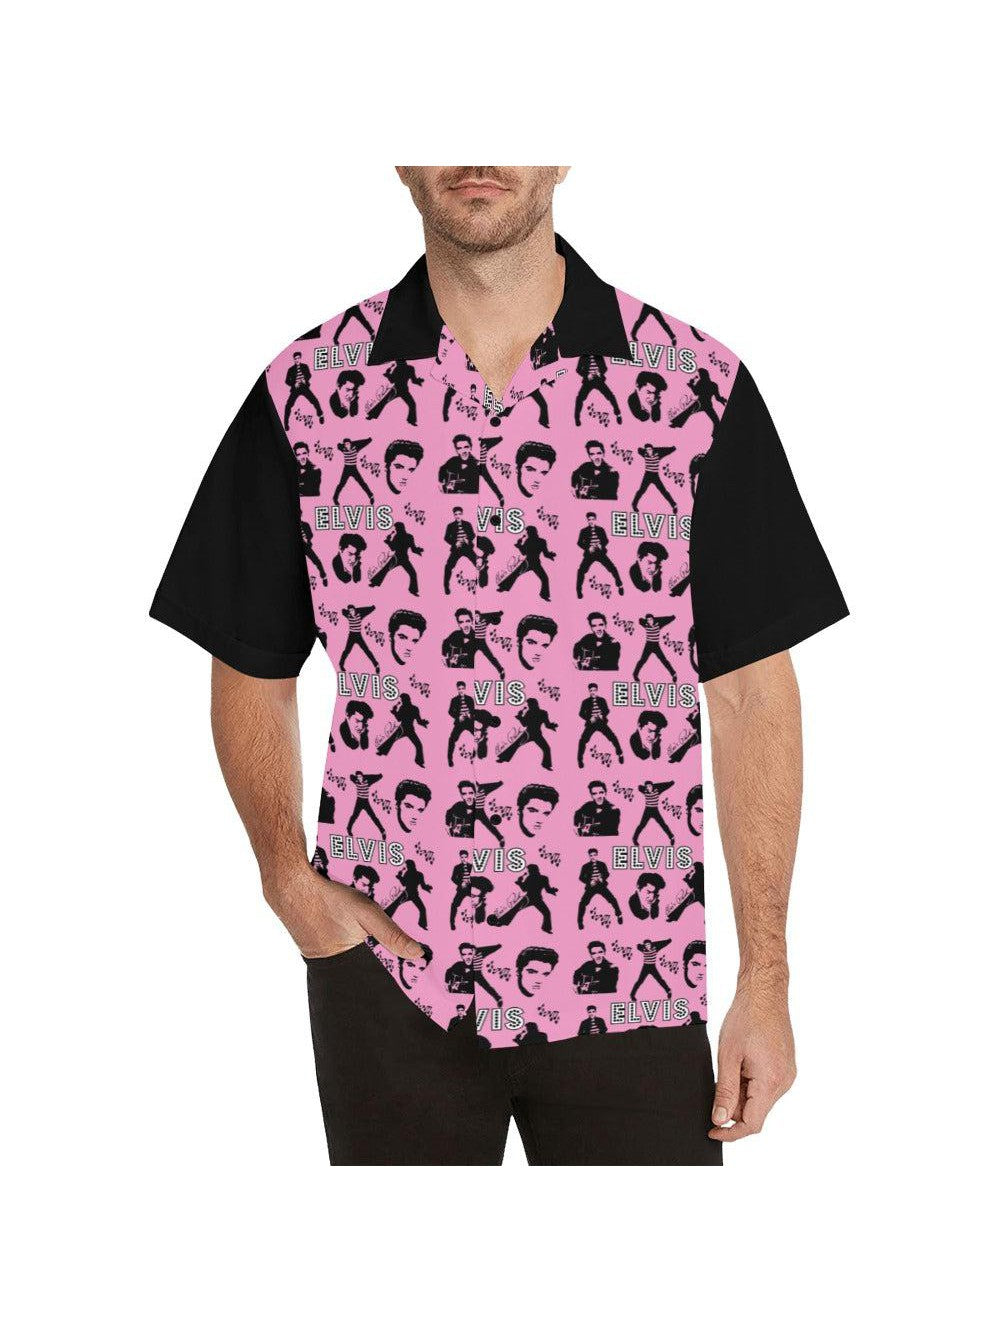 PINK Elvis Jailhouse Rock Mens Shirt